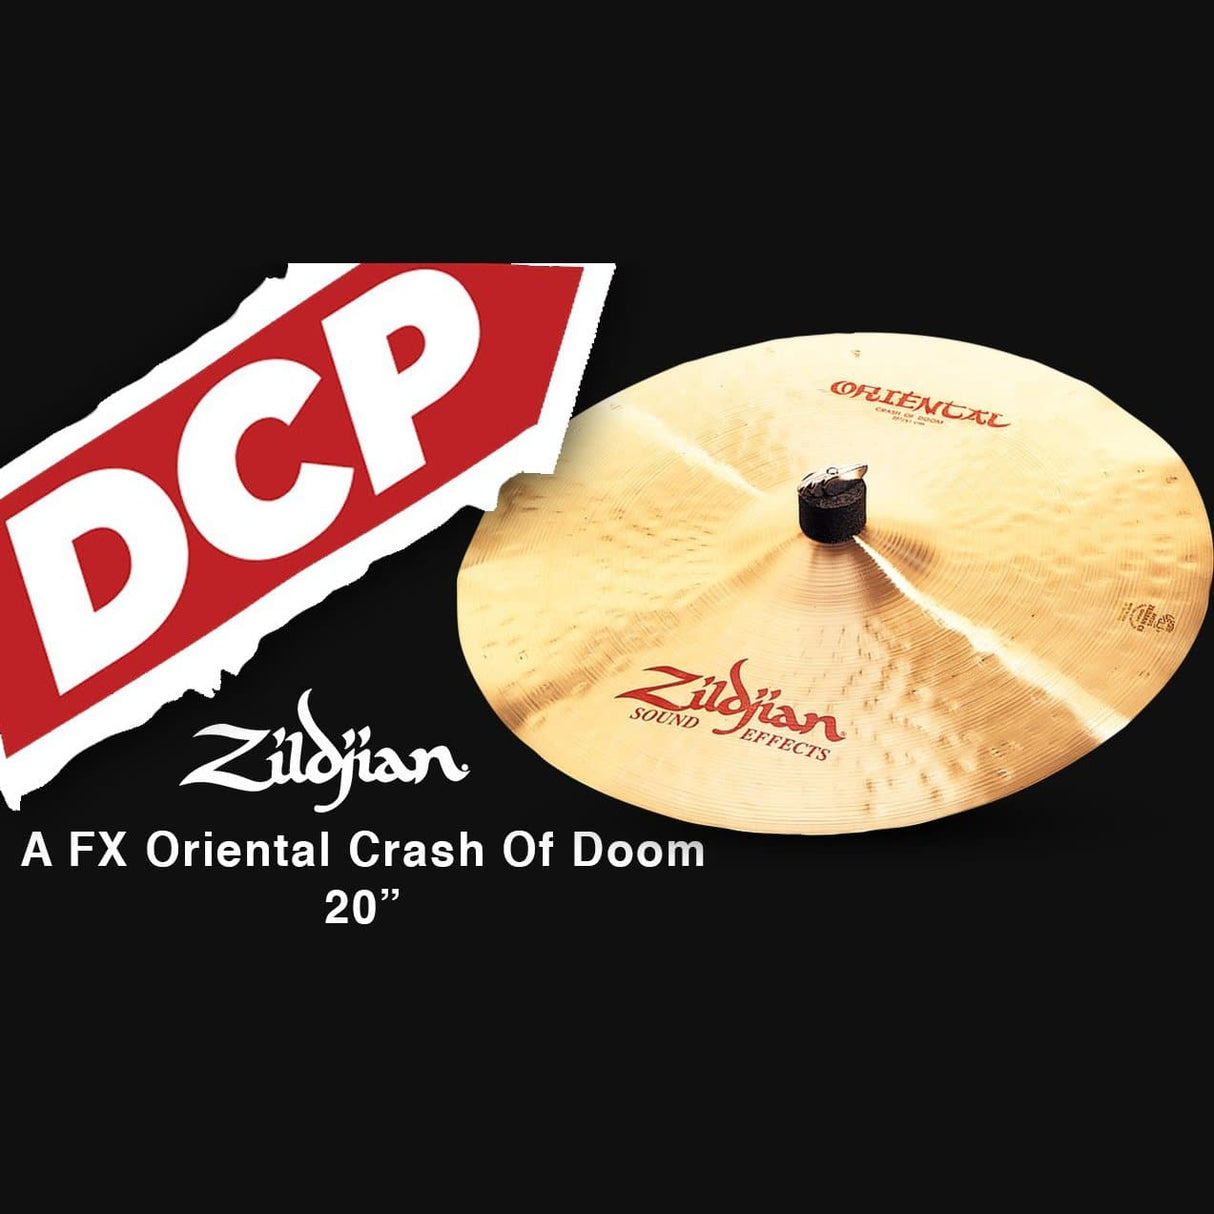 Zildjian A FX Oriental Crash Of Doom Cymbal 20"